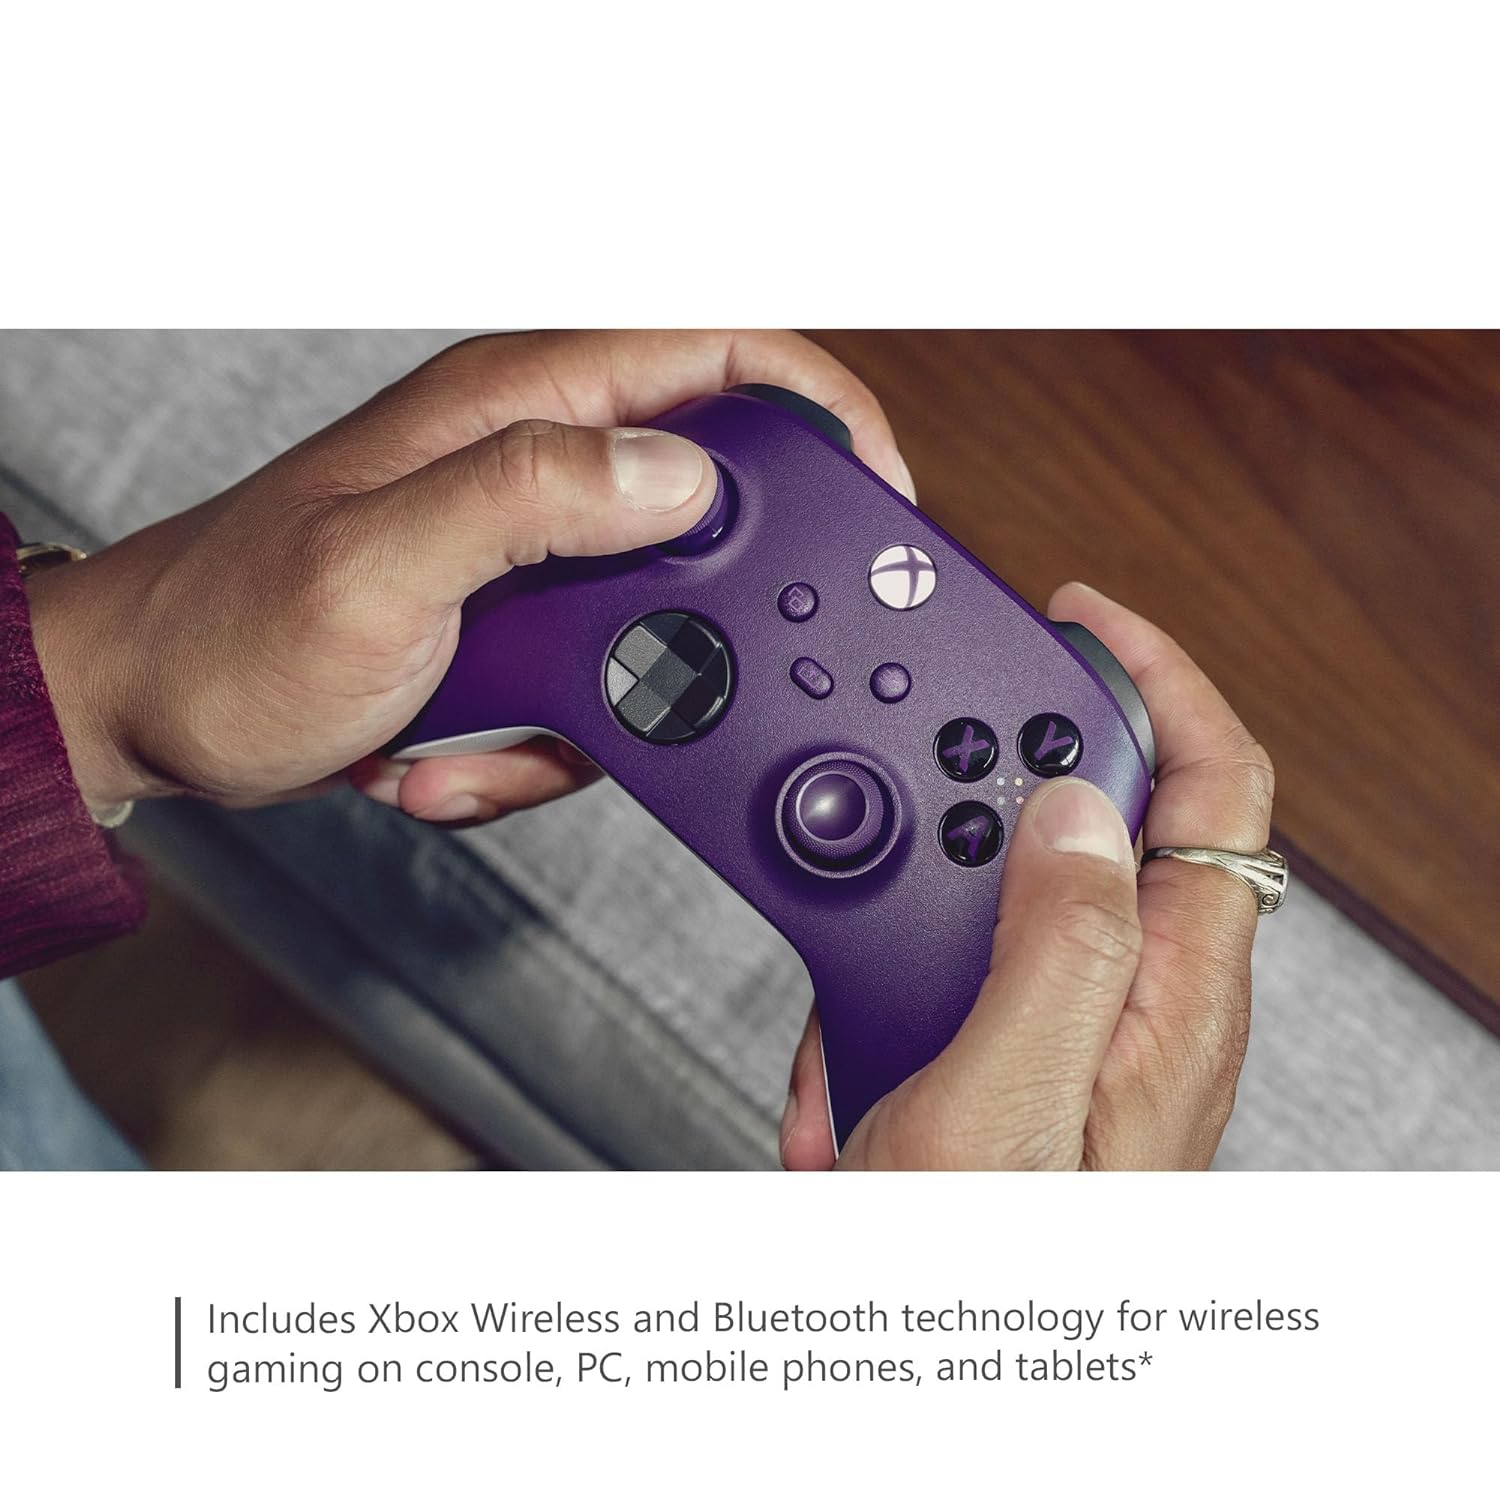 XBOX Wireless Controller - Astral Purple